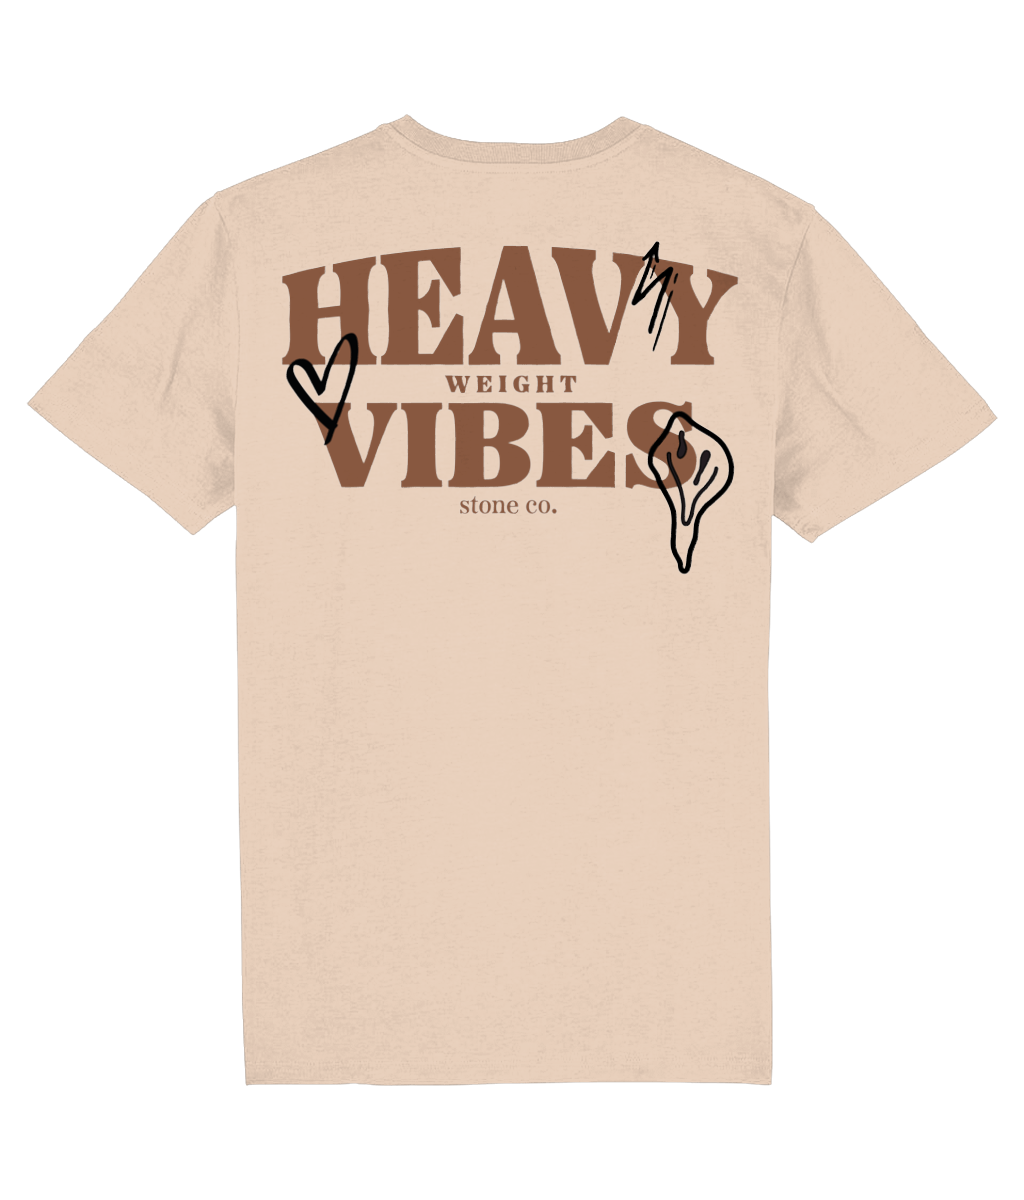 Heavy vibes t-shirt